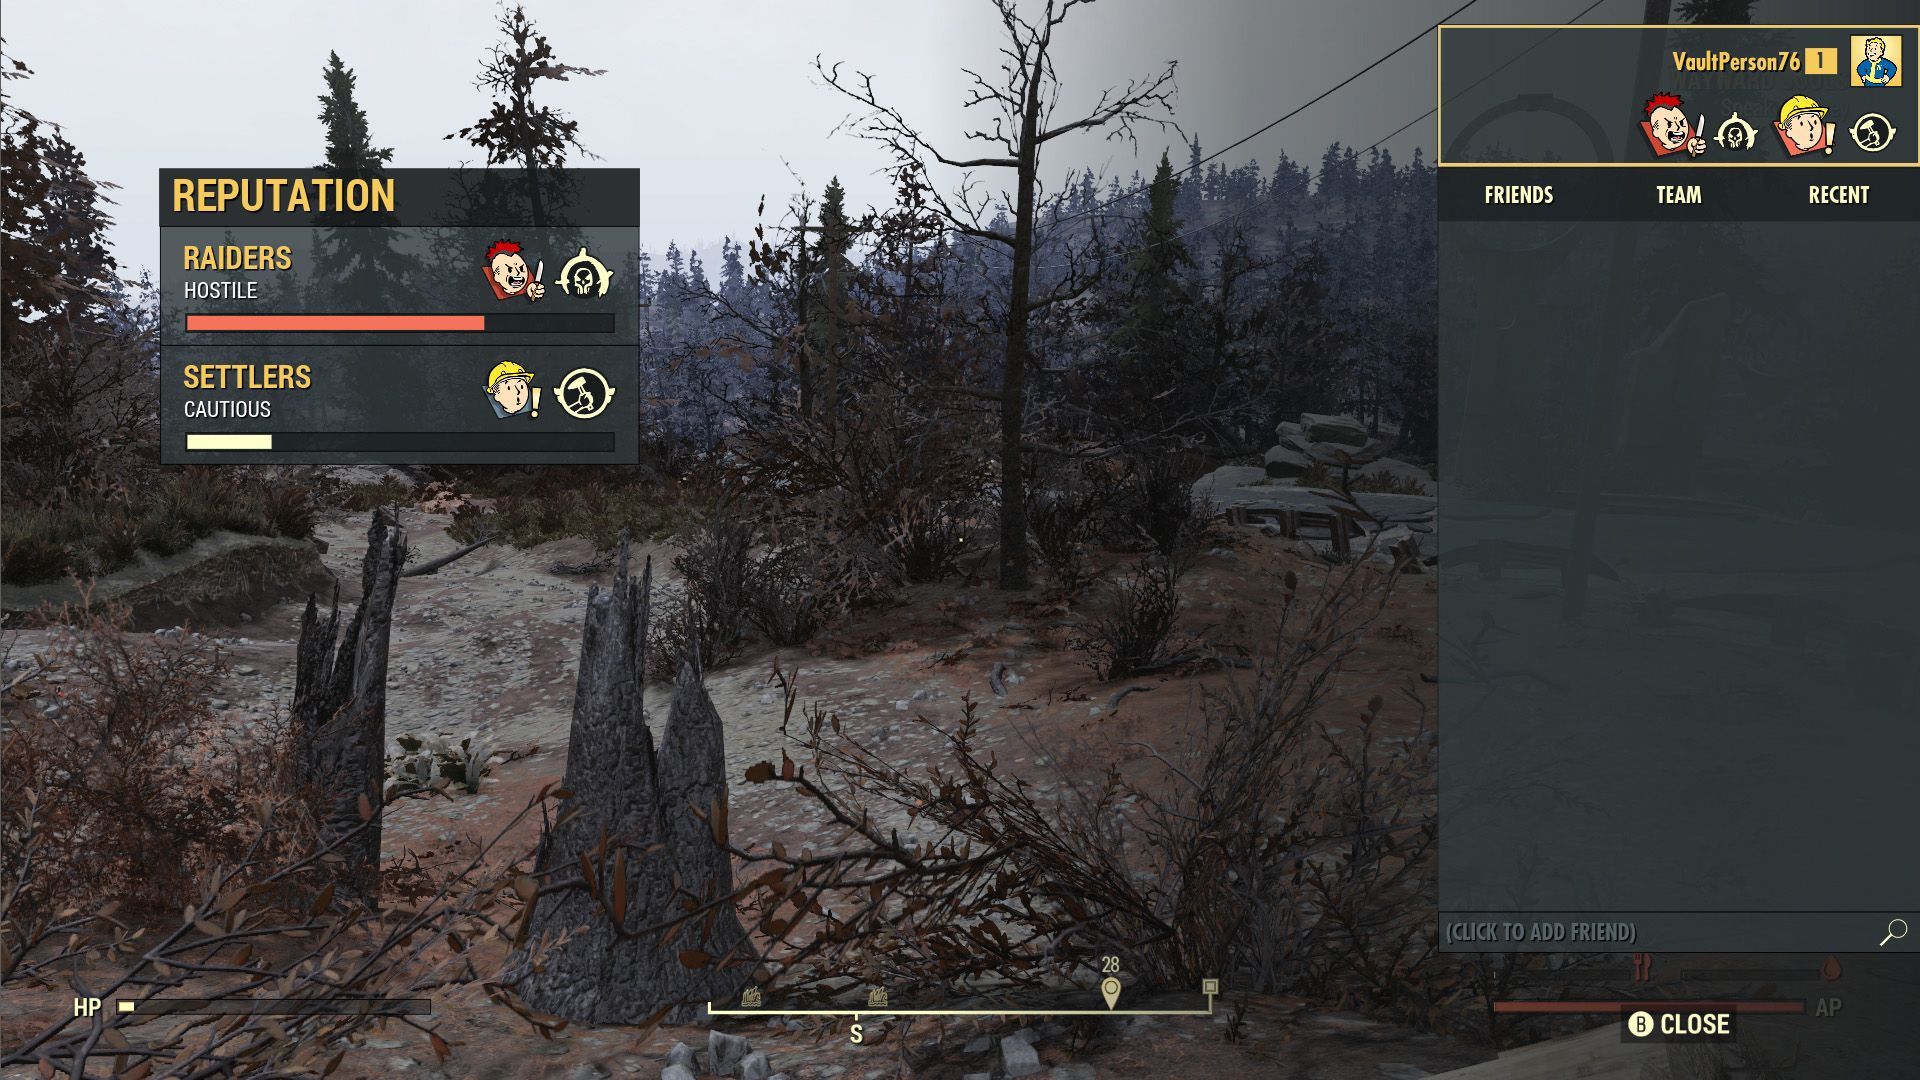 The Reputation progress bar in the social menu of Fallout 76.